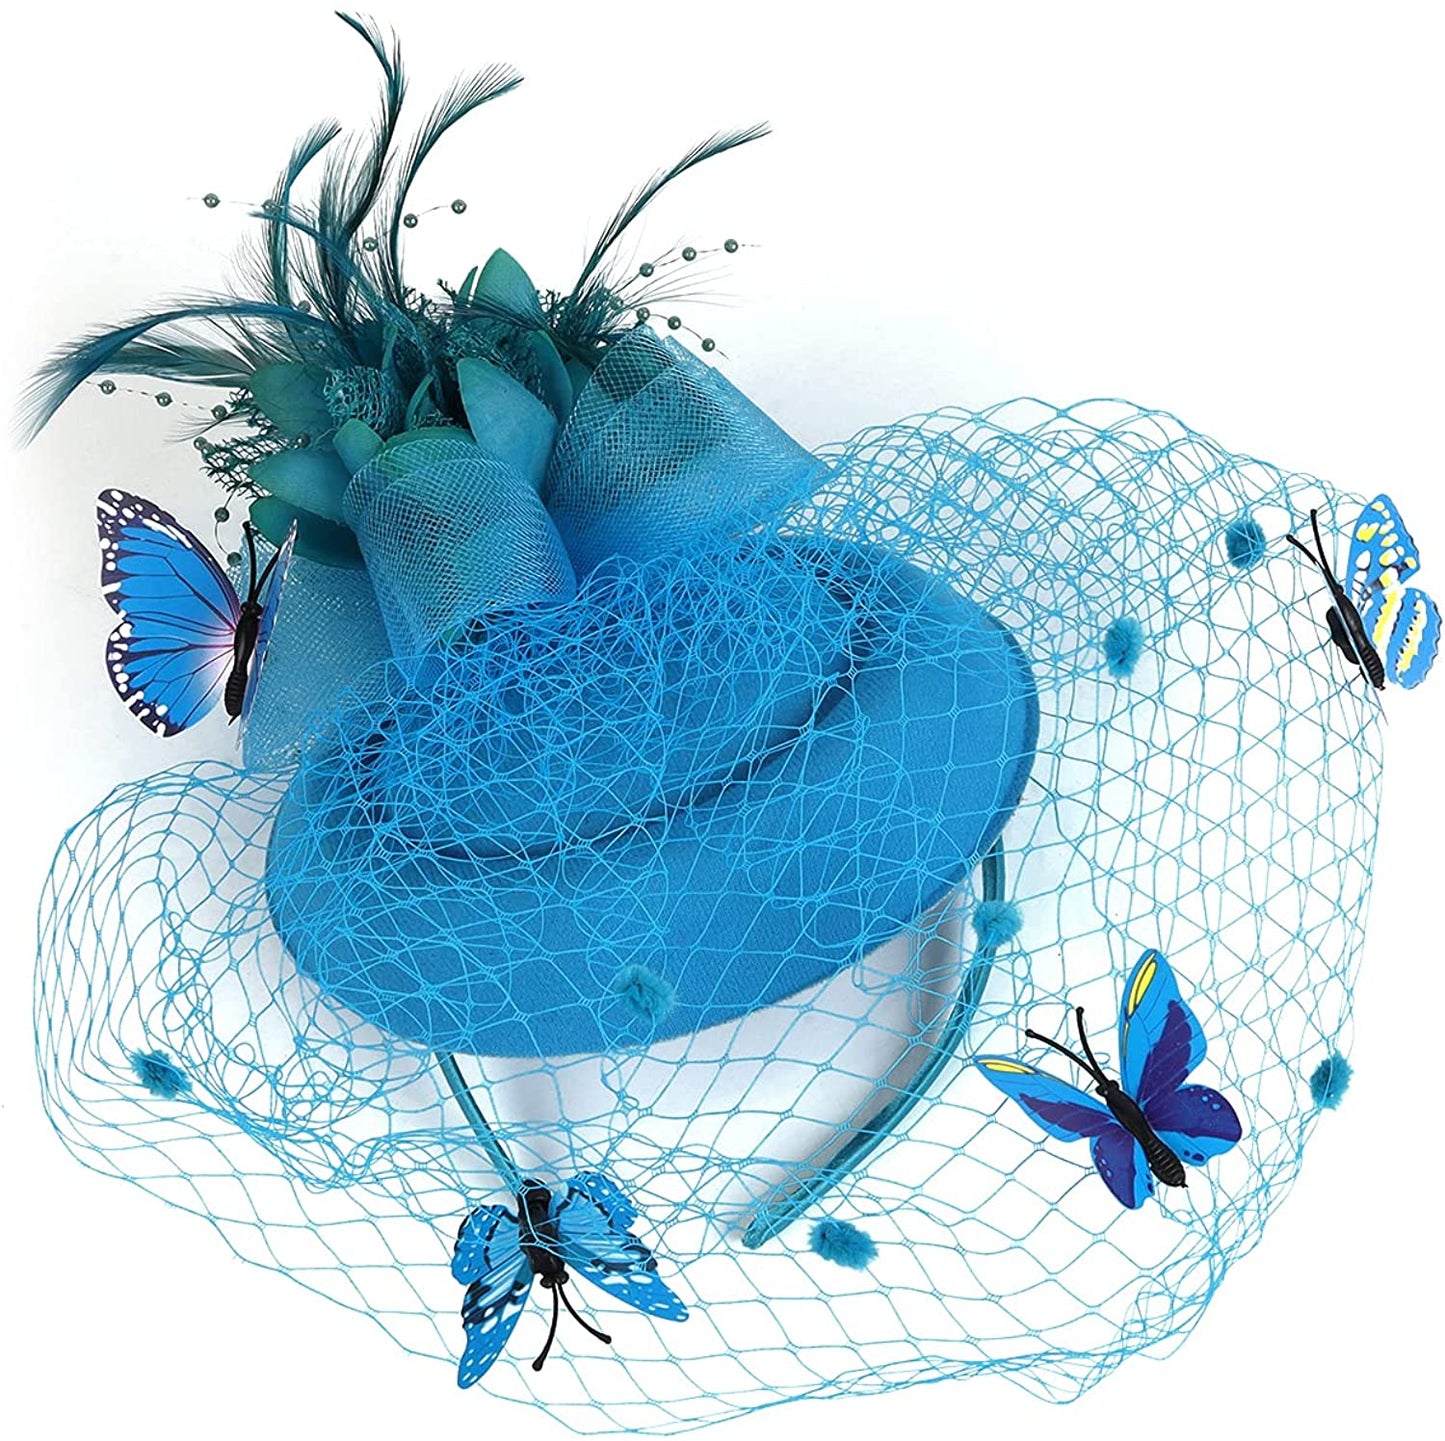 Cap Point Lake Blue Mirva Kentucky Derby Flower Batterfly Veil Tea Party Wedding Party Hat Fascinators